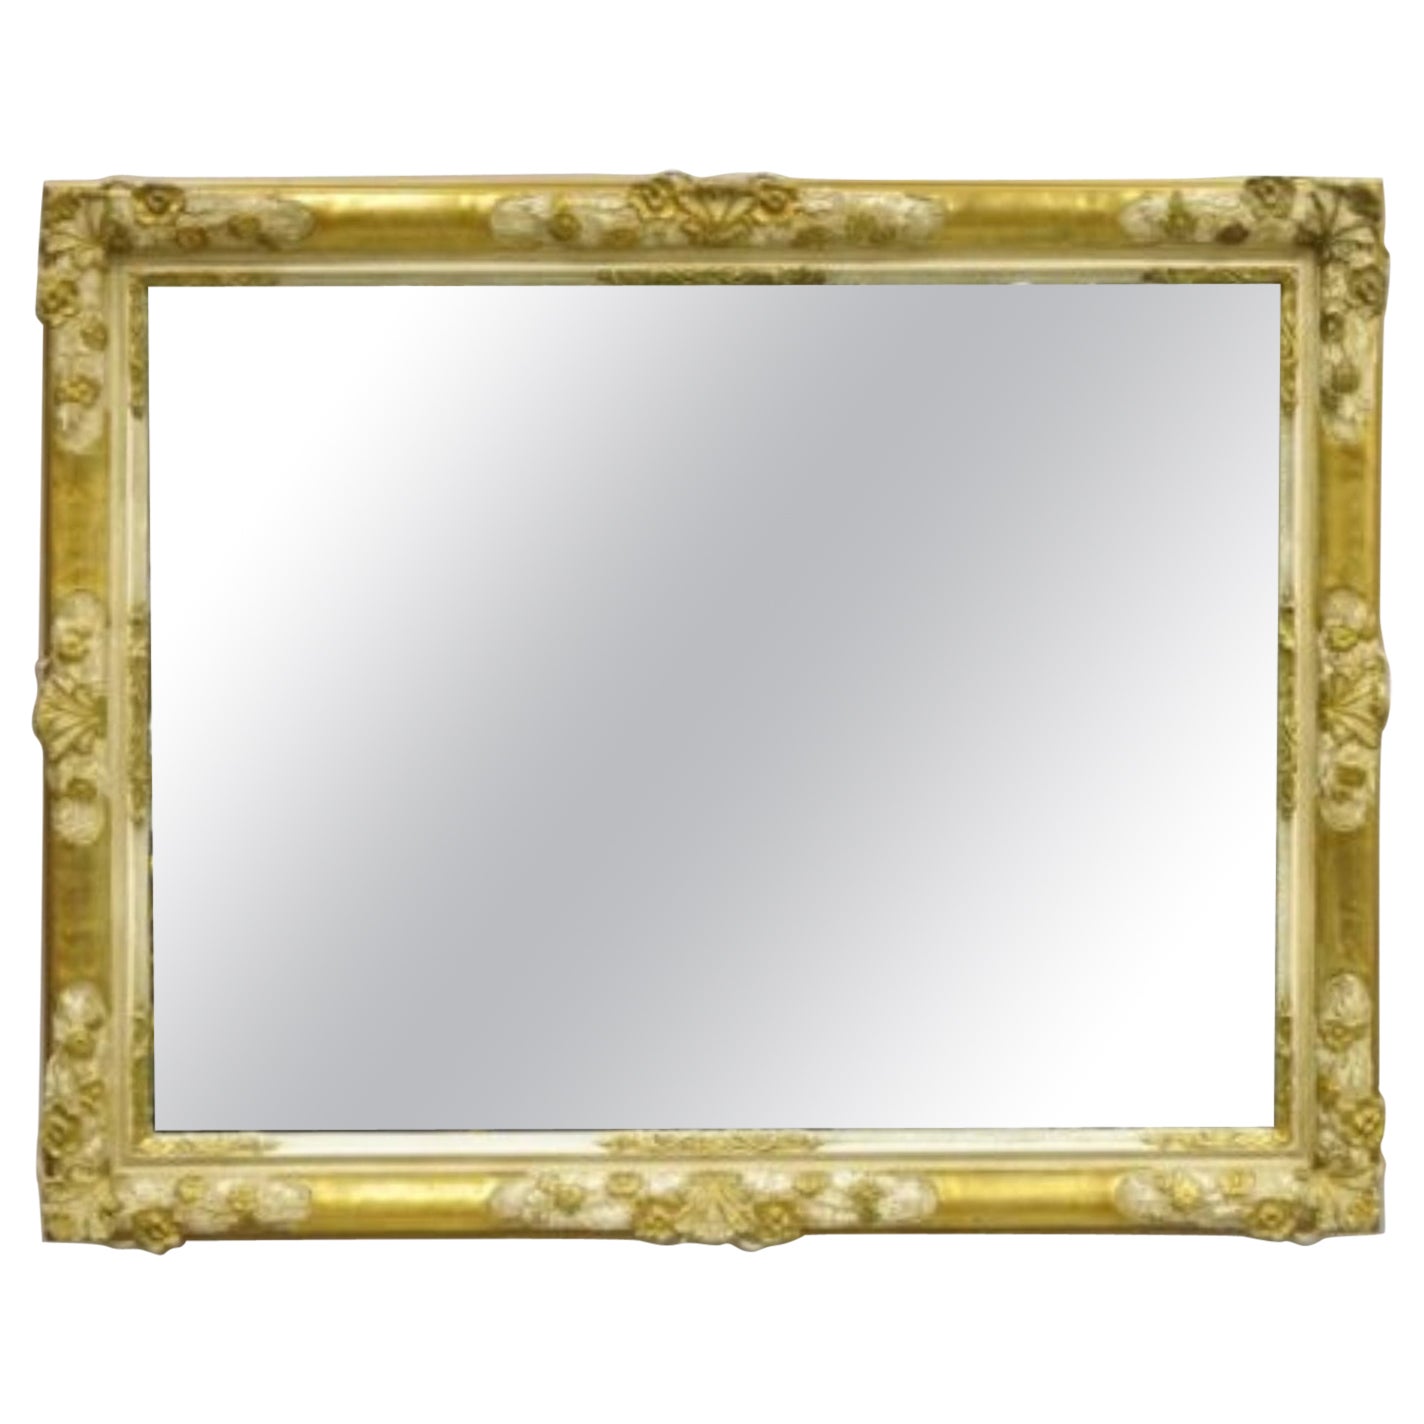 Vintage FJ Newcomb Italian Regency Style Gold Cream Gilt Rectangular Wall Mirror For Sale